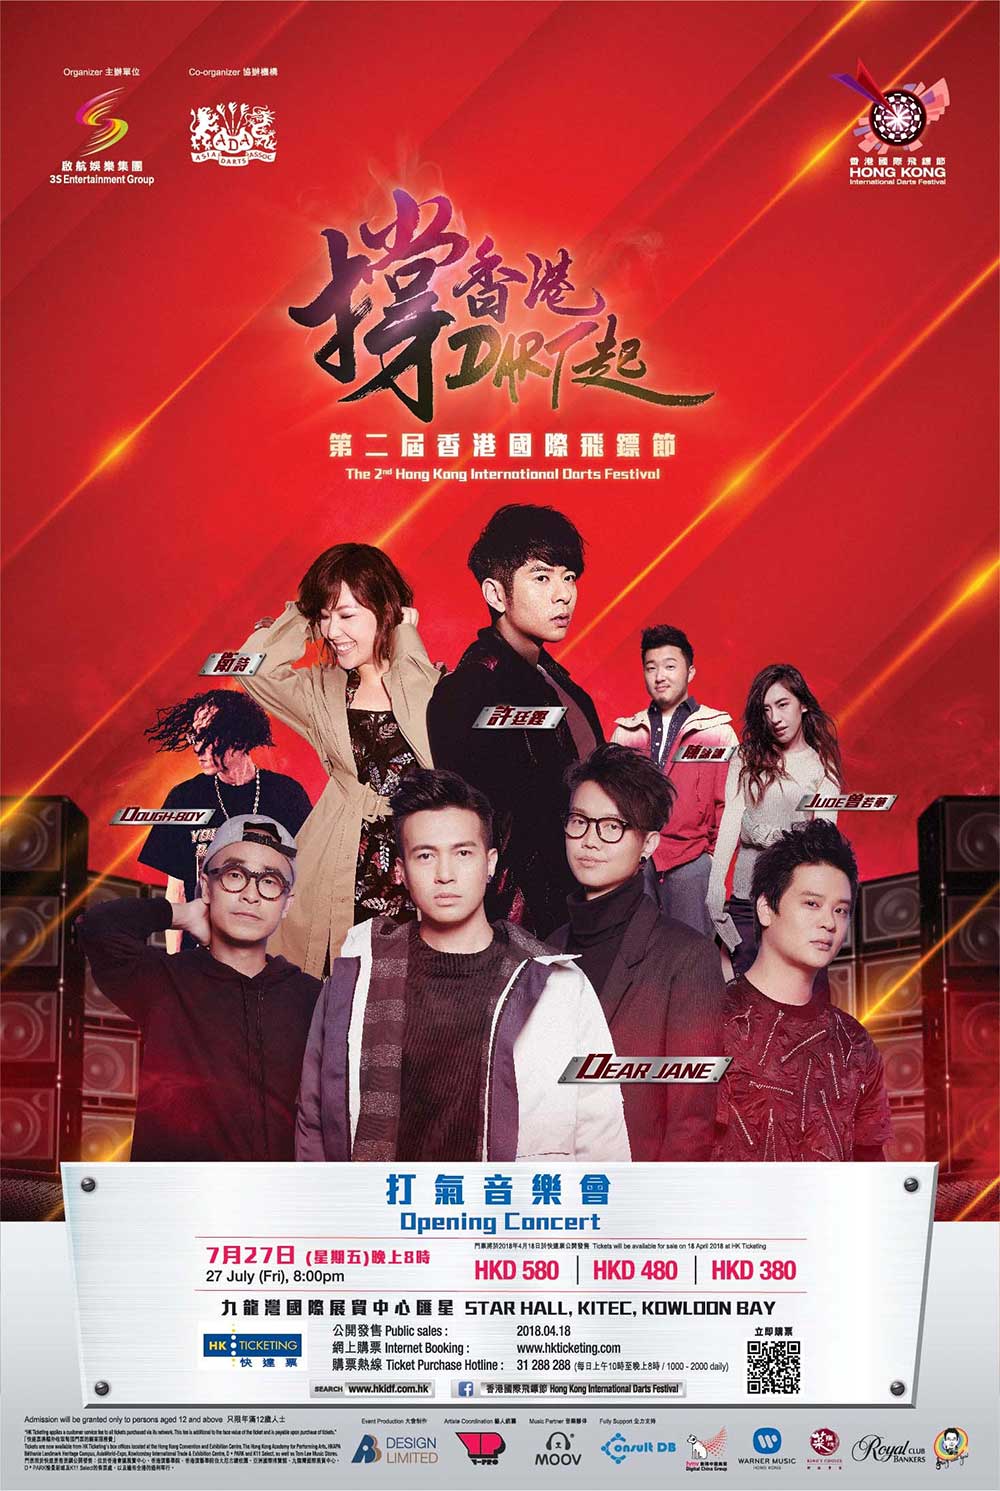 Hong Kong International Darts Festival – Opening Concert